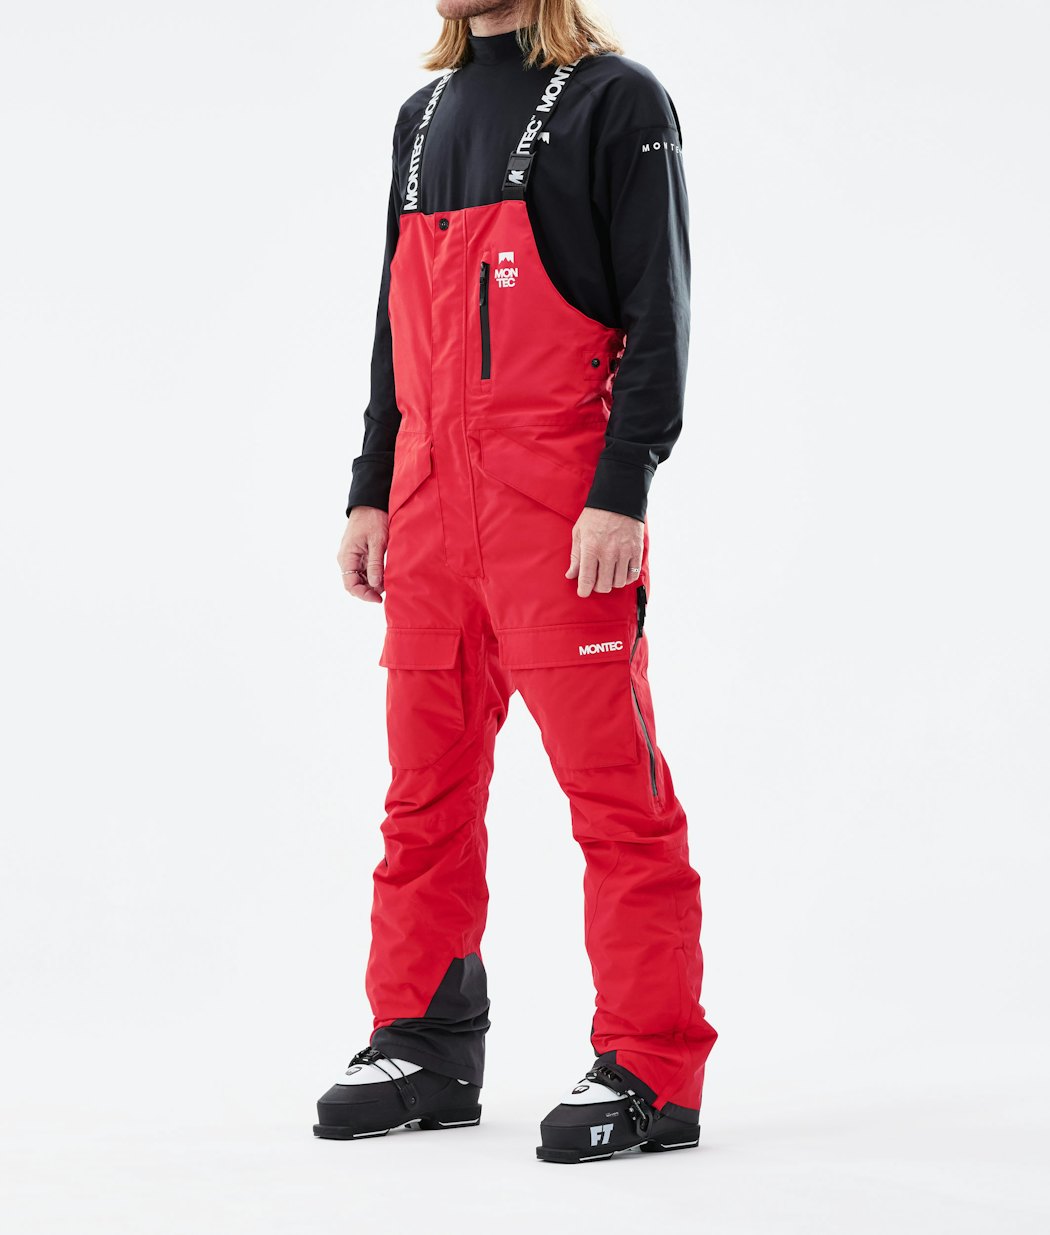 Fawk 2021 Ski Pants Men Red